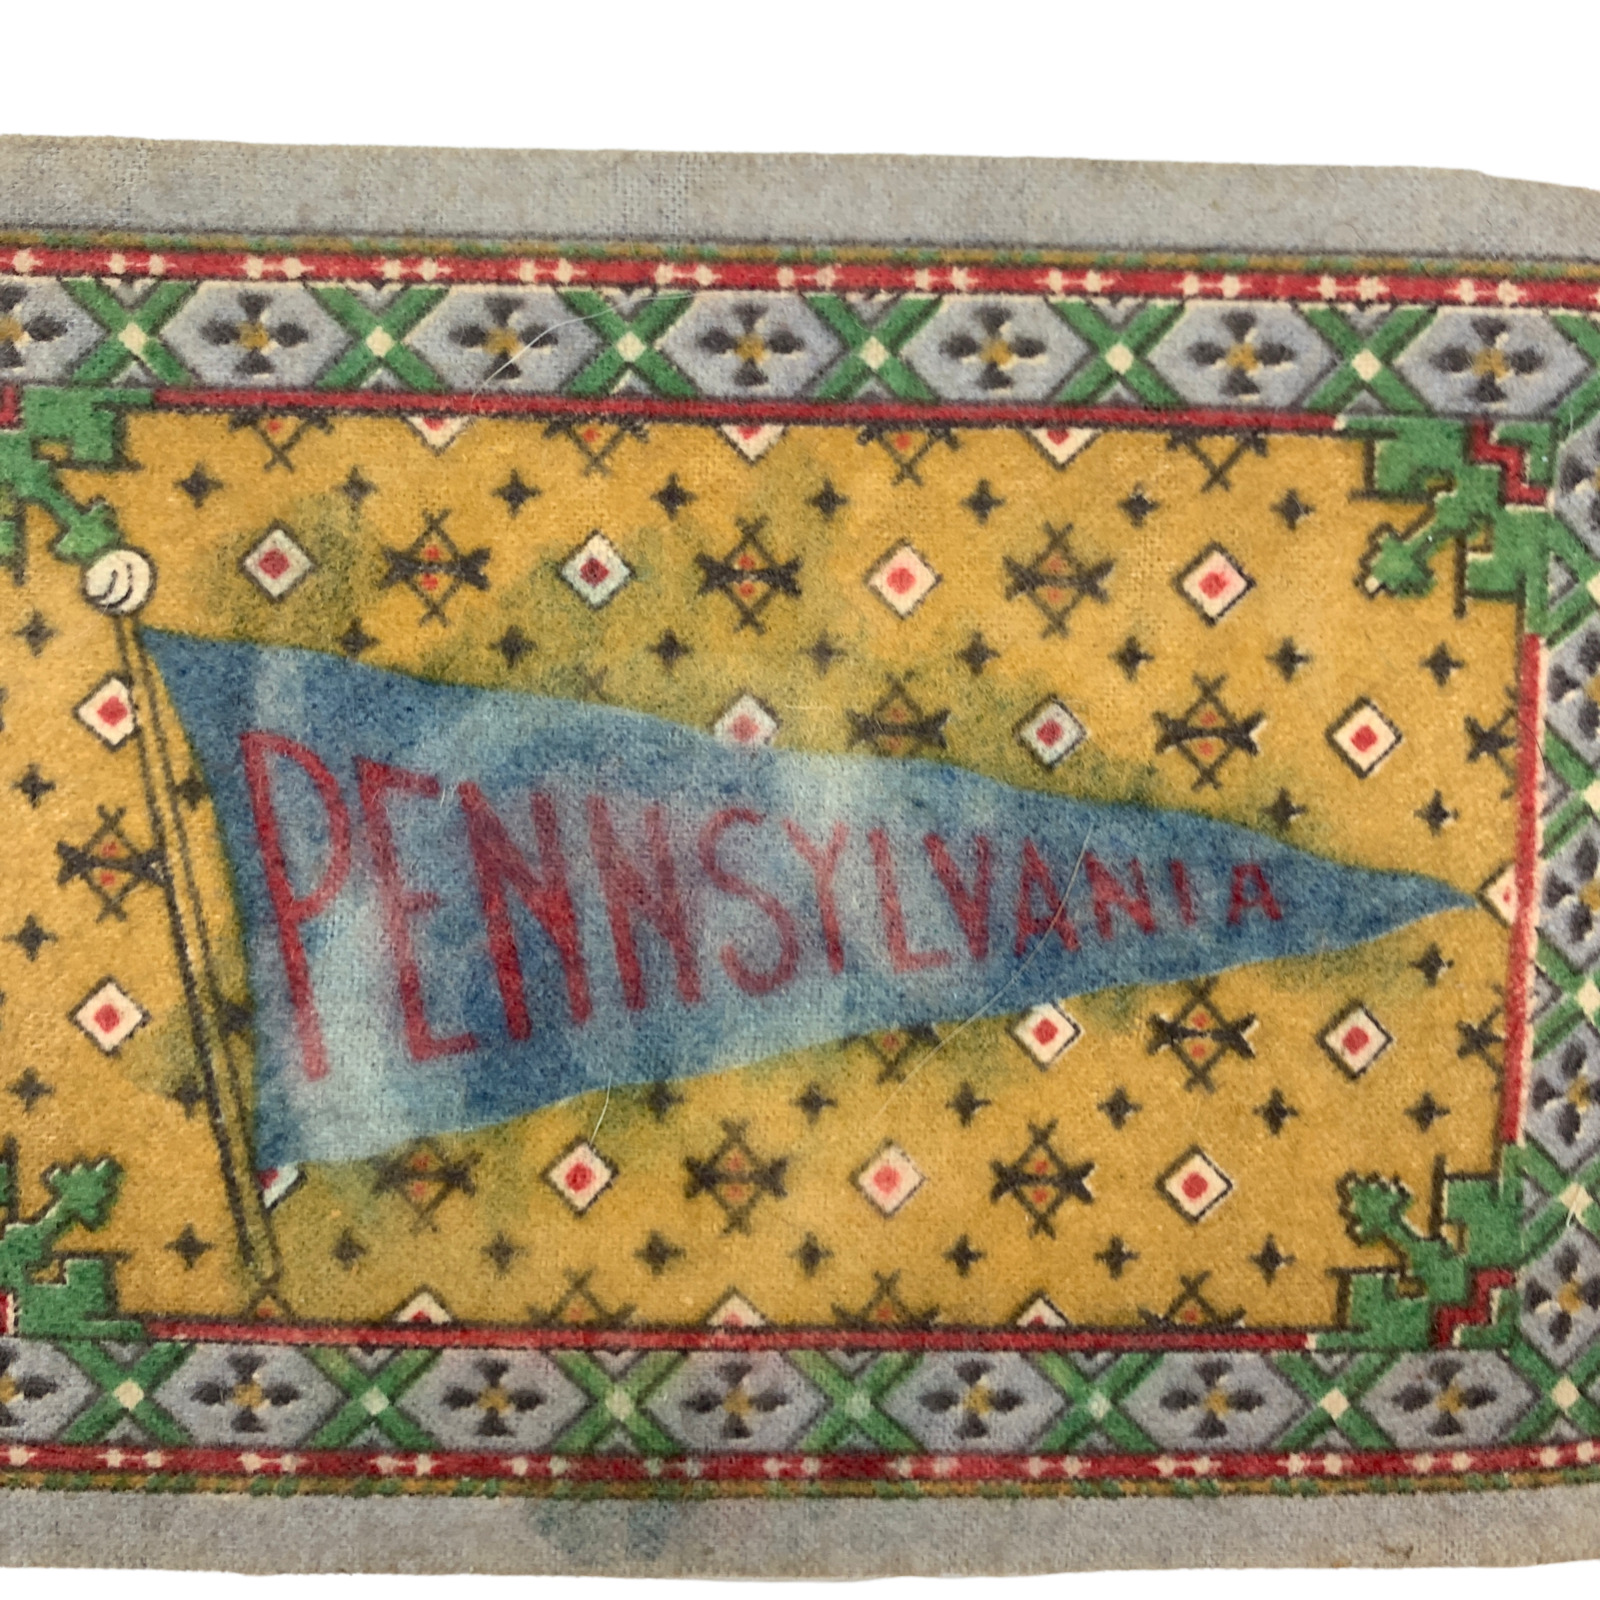 Pennsylvania university Antique tapestry pennant flag vintage